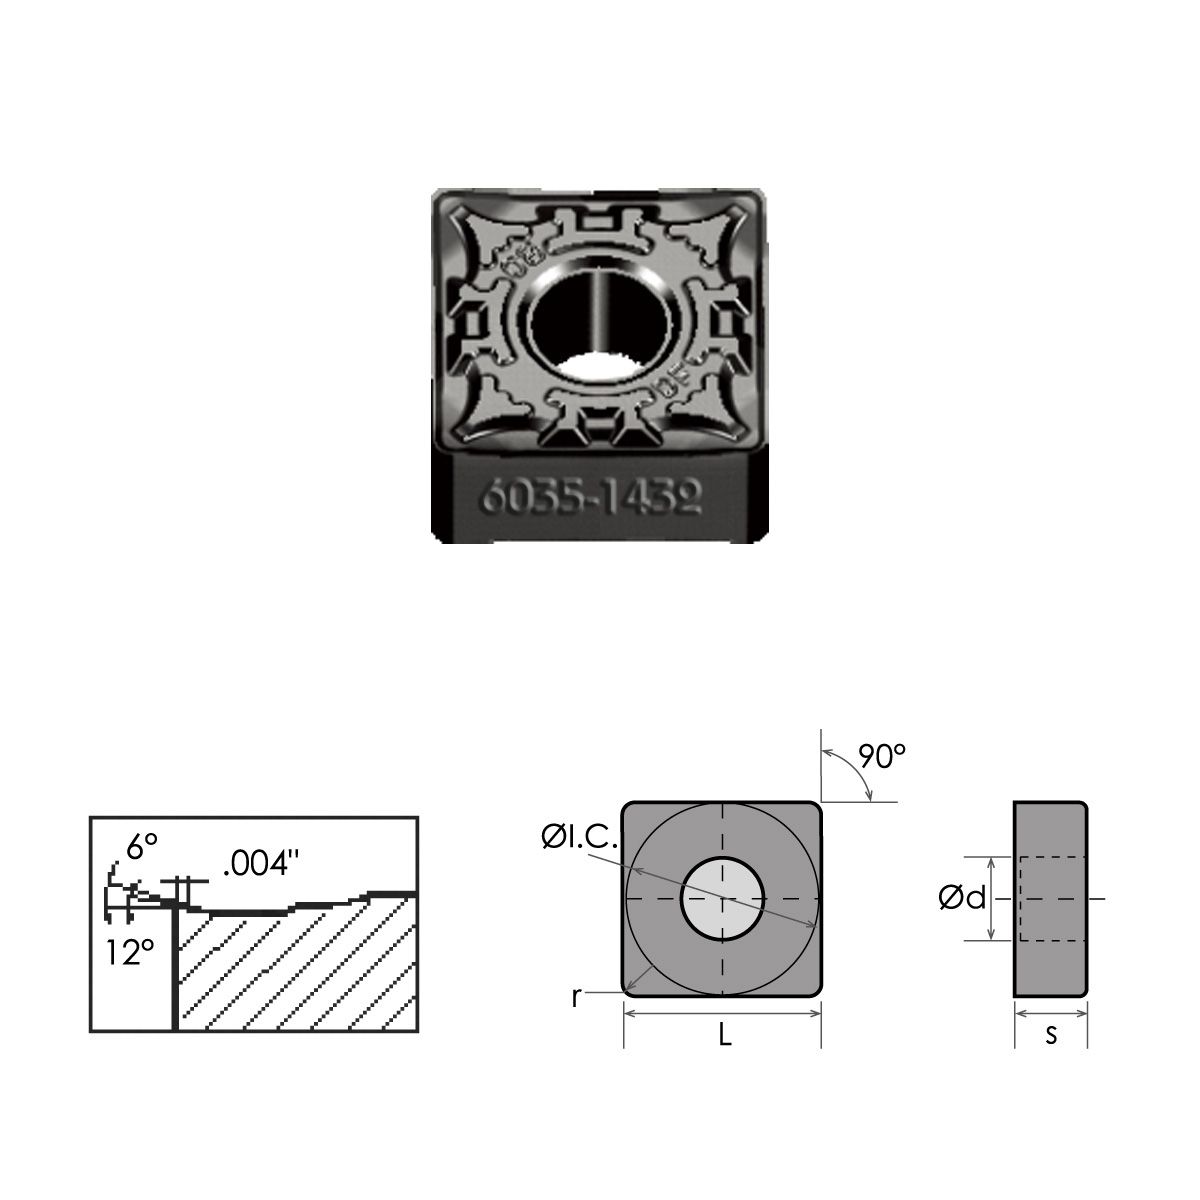 SNMG-432-DF BLACK DIAMOND COATED CARBIDE INSERT (6035-1432)